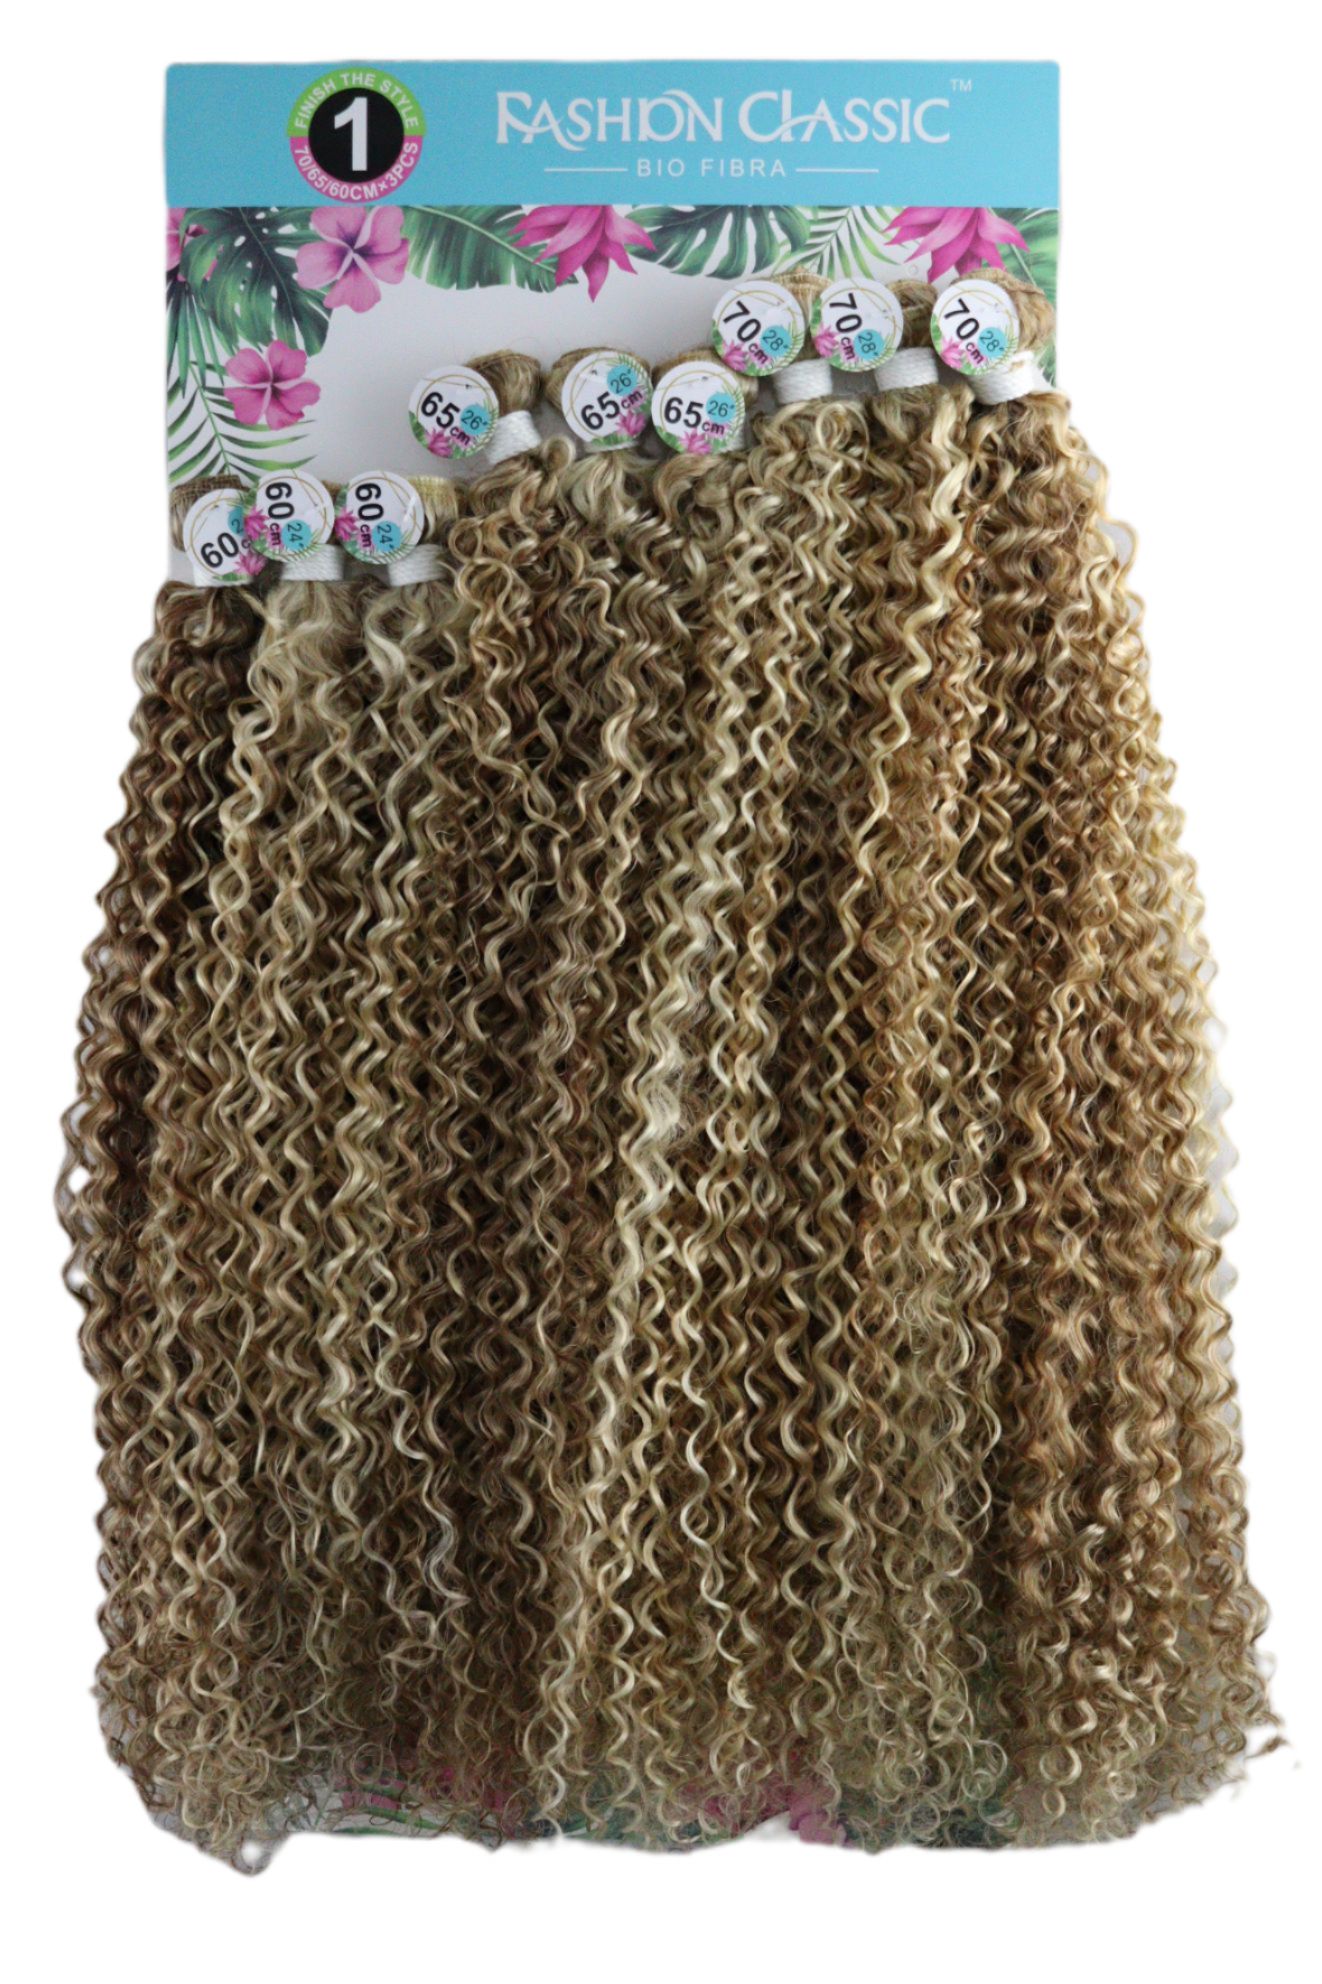 Lindona - SP18/613 - Kell Hair Brasil